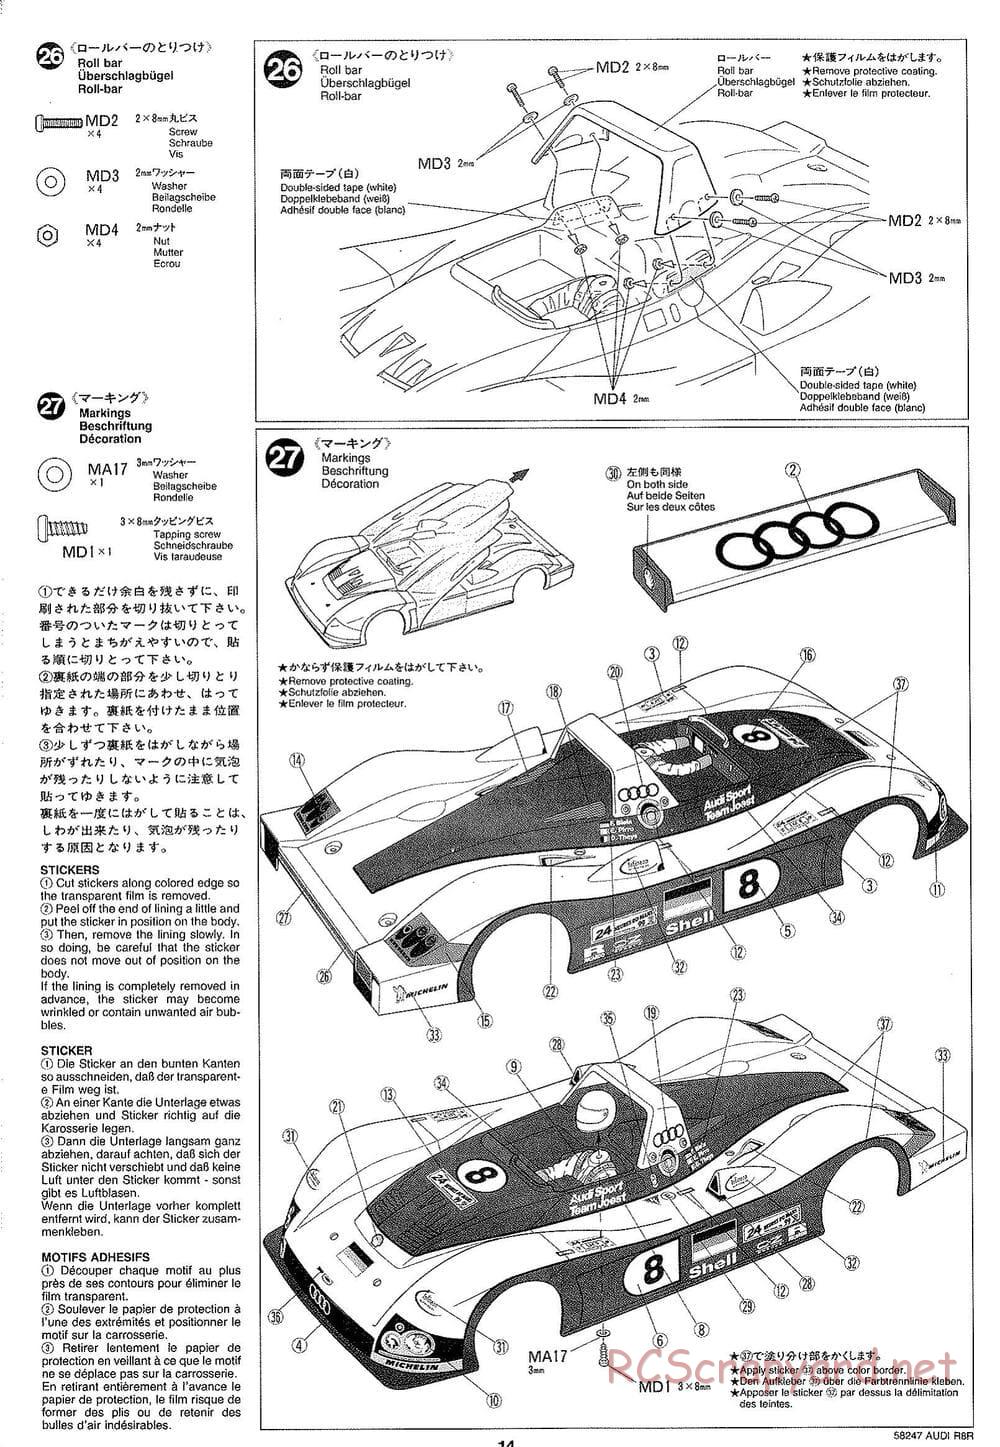 Tamiya - Audi R8R - F103LM Chassis - Manual - Page 14